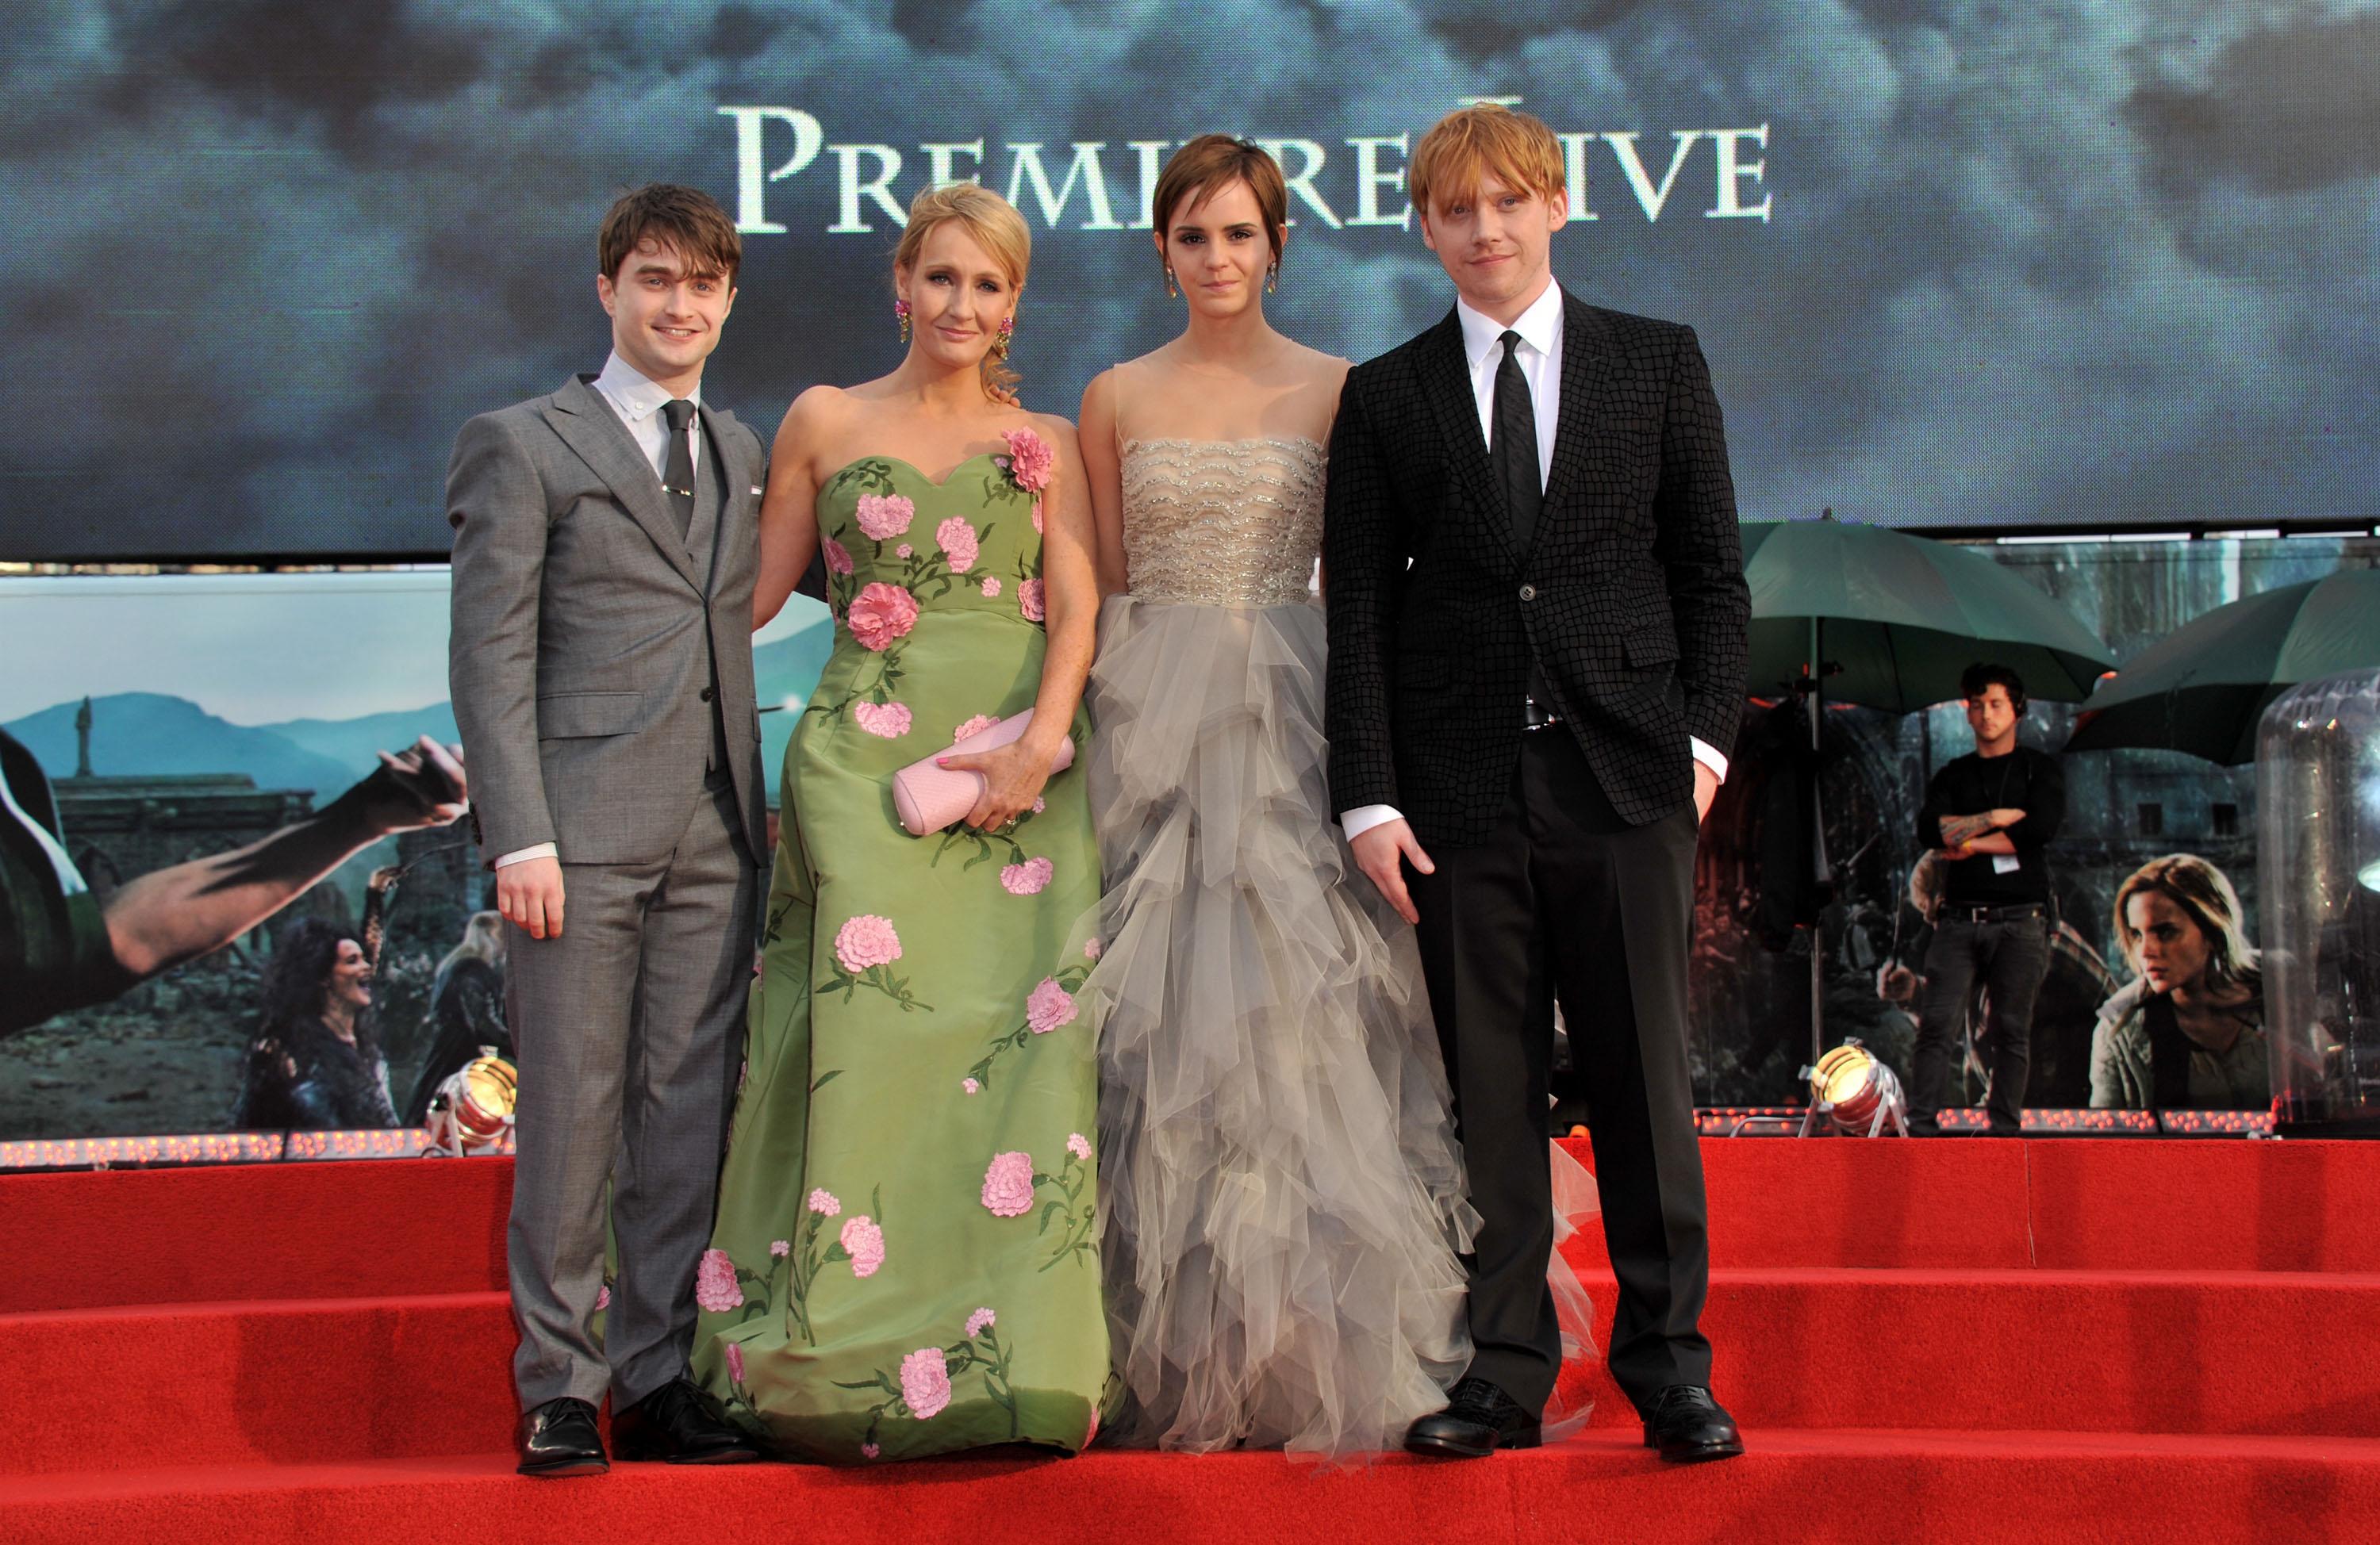 Jk Rowling Premiere